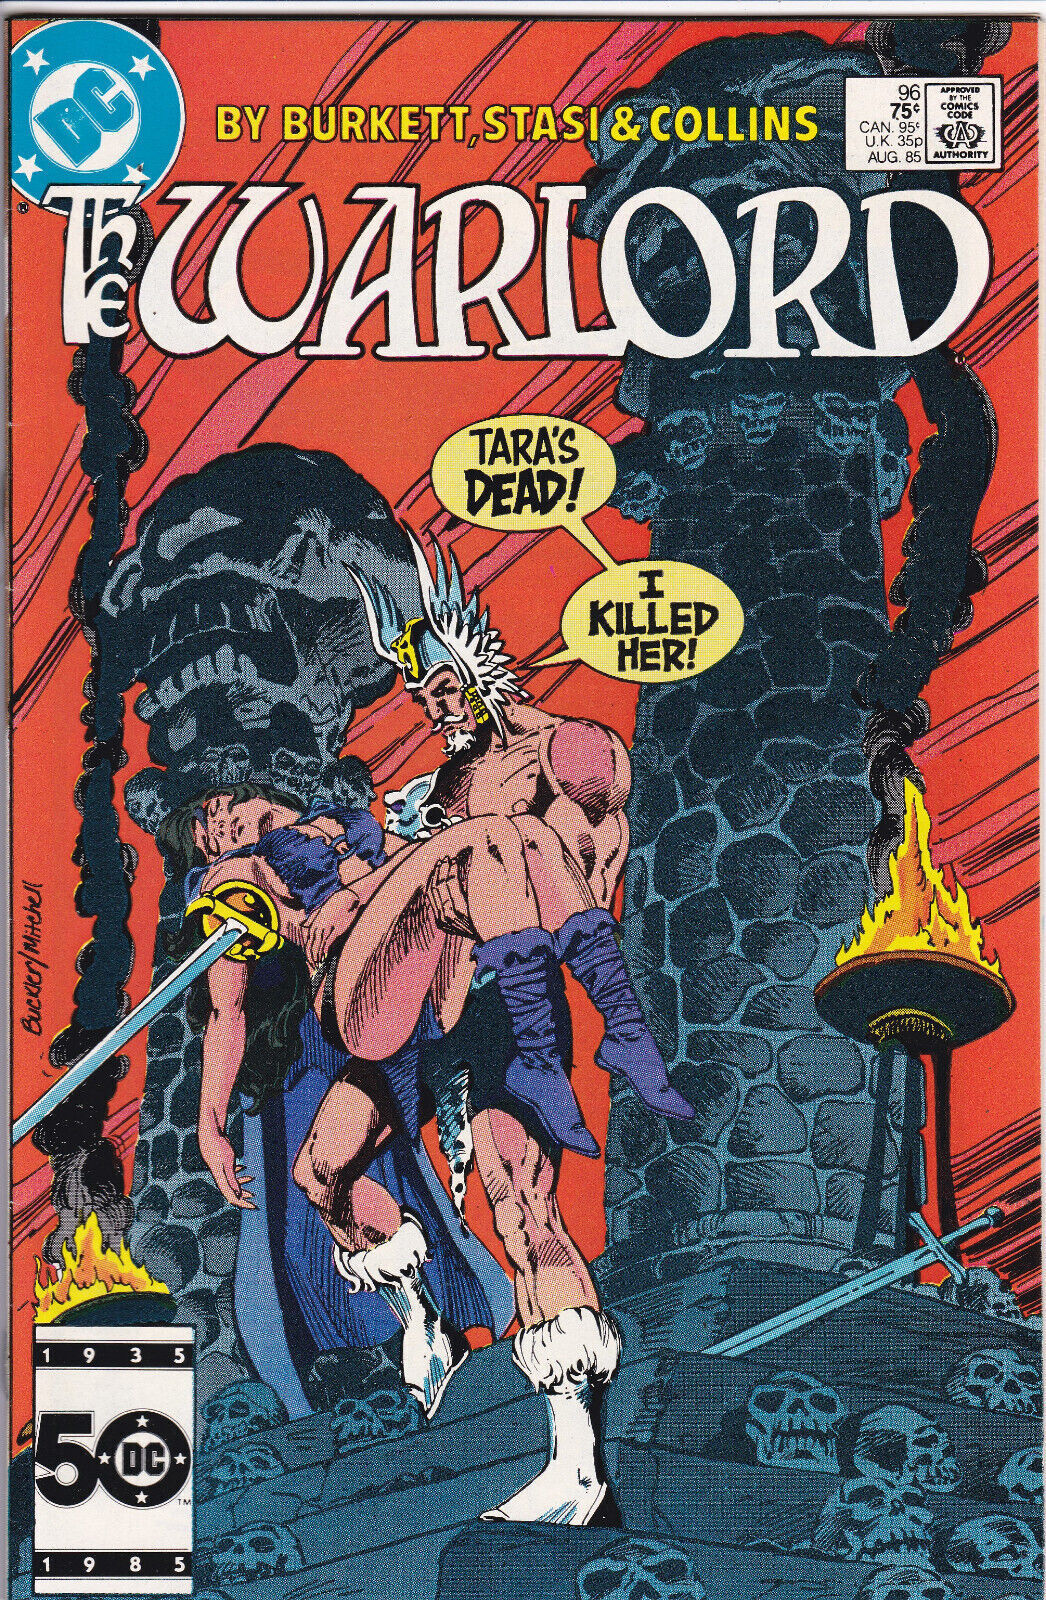 The Warlord  #96, Vol. 1 (1976-1989) DC Comics